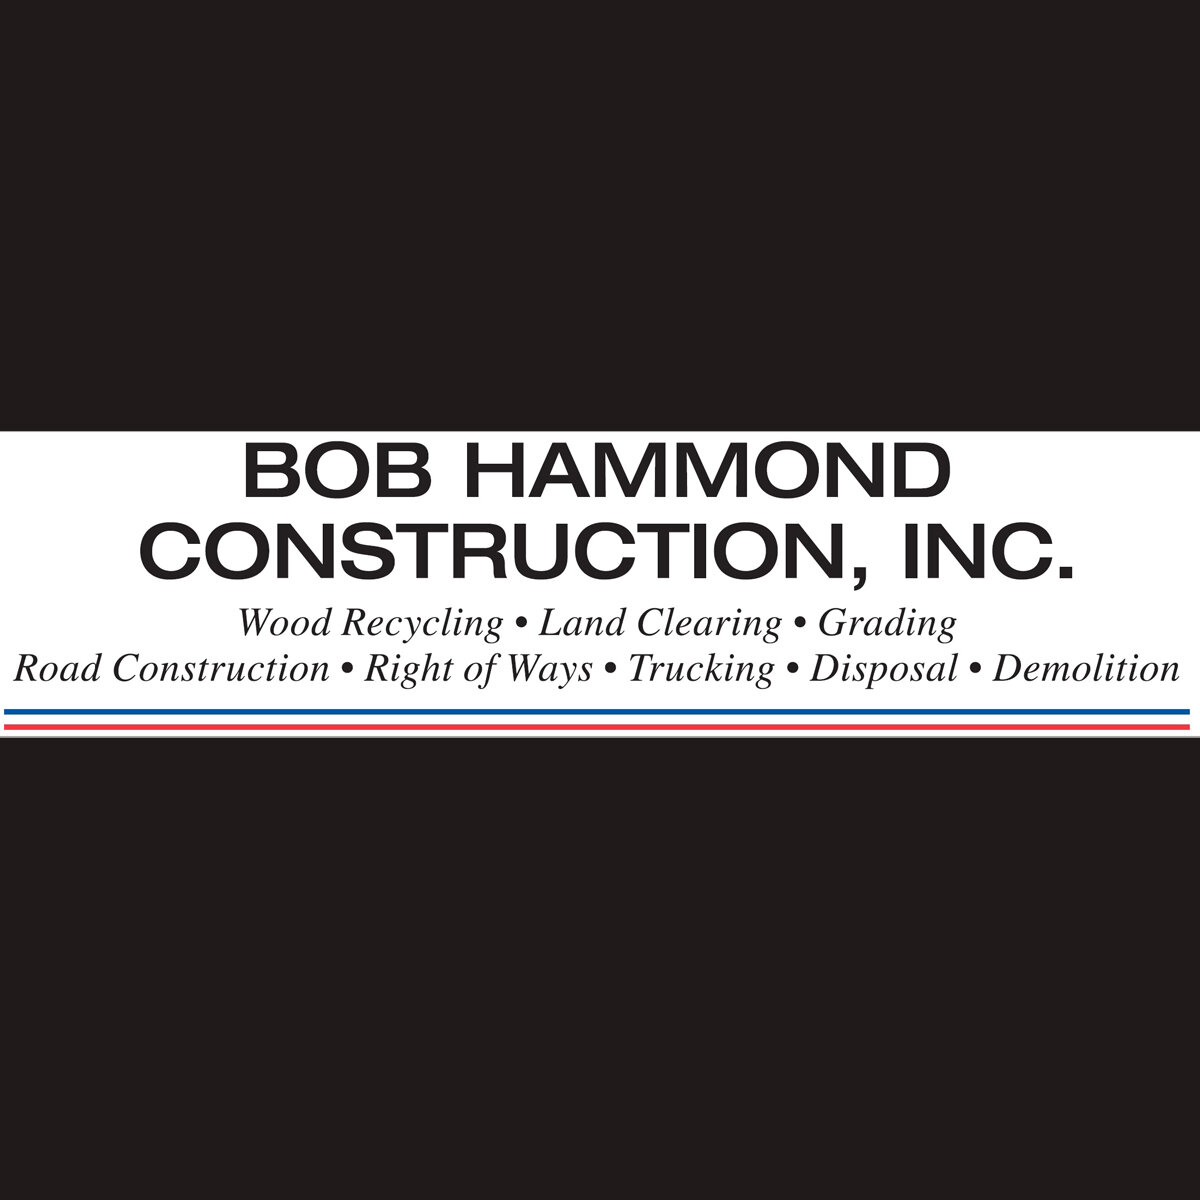 Bob Hammond ConstructionSquare-1.jpg